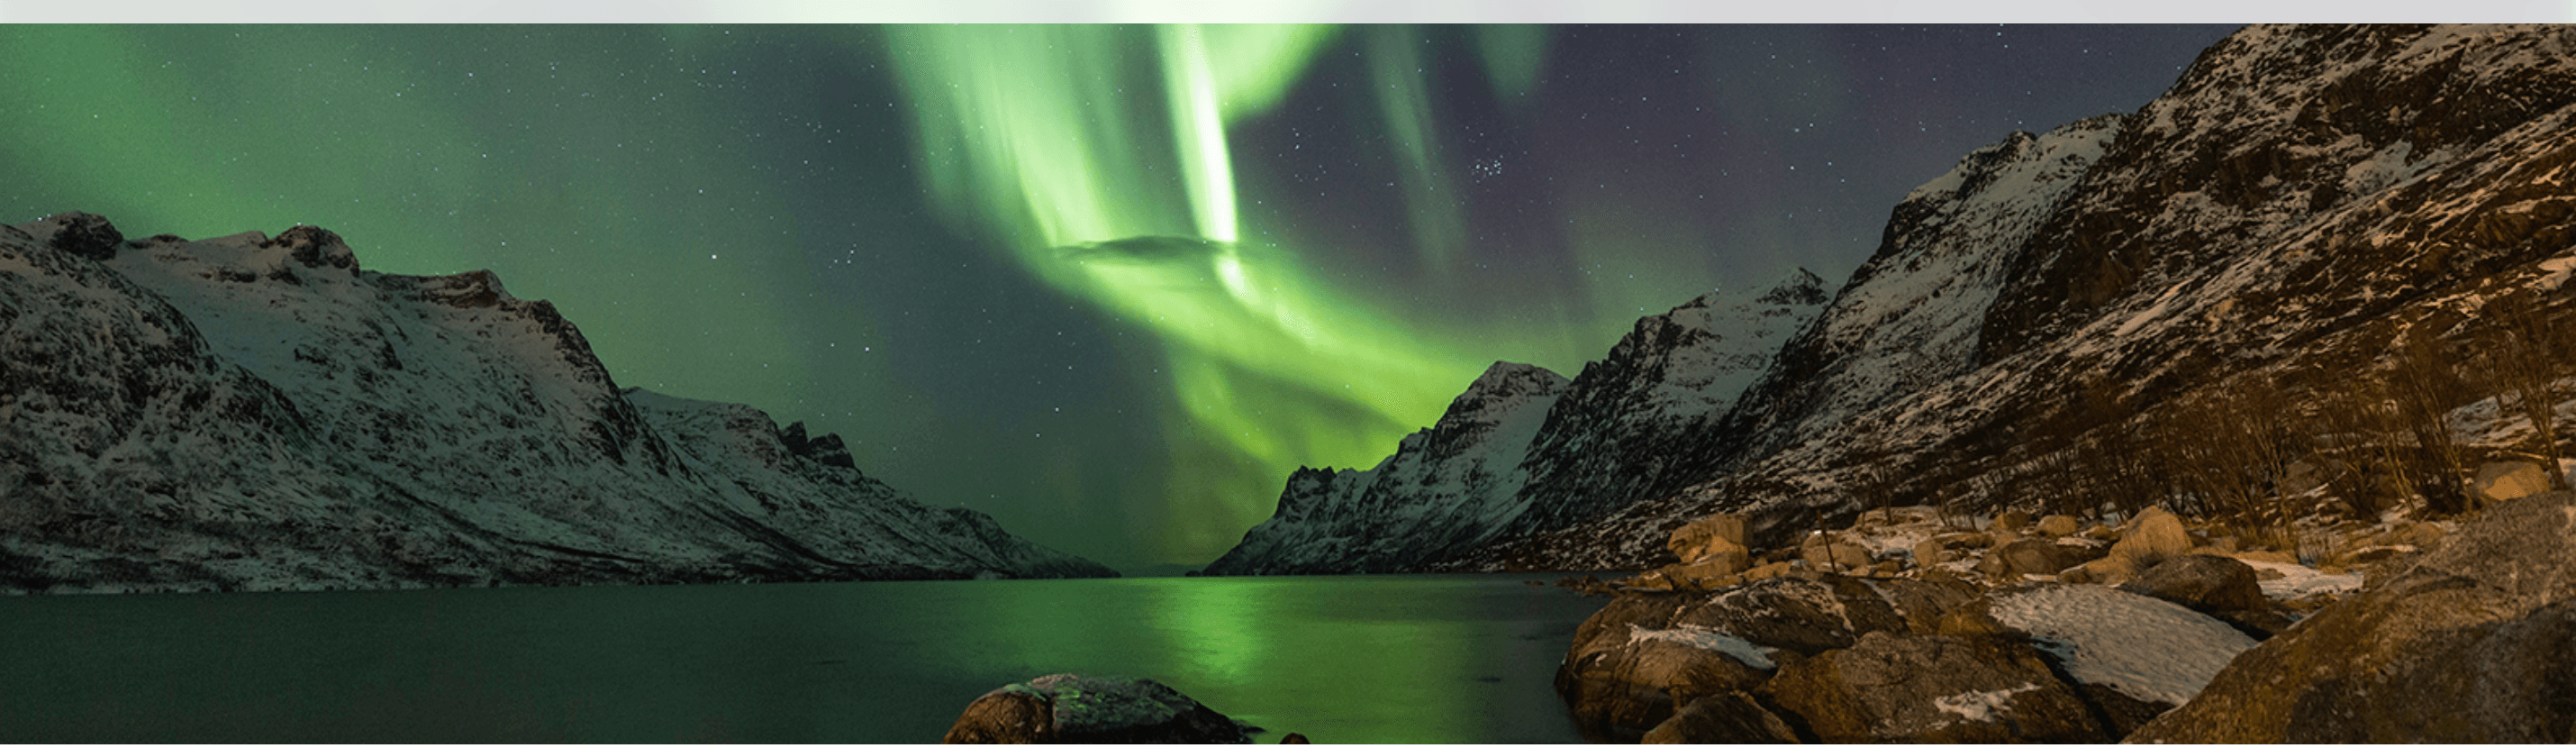 2022 Northern Lights of Finland - background banner